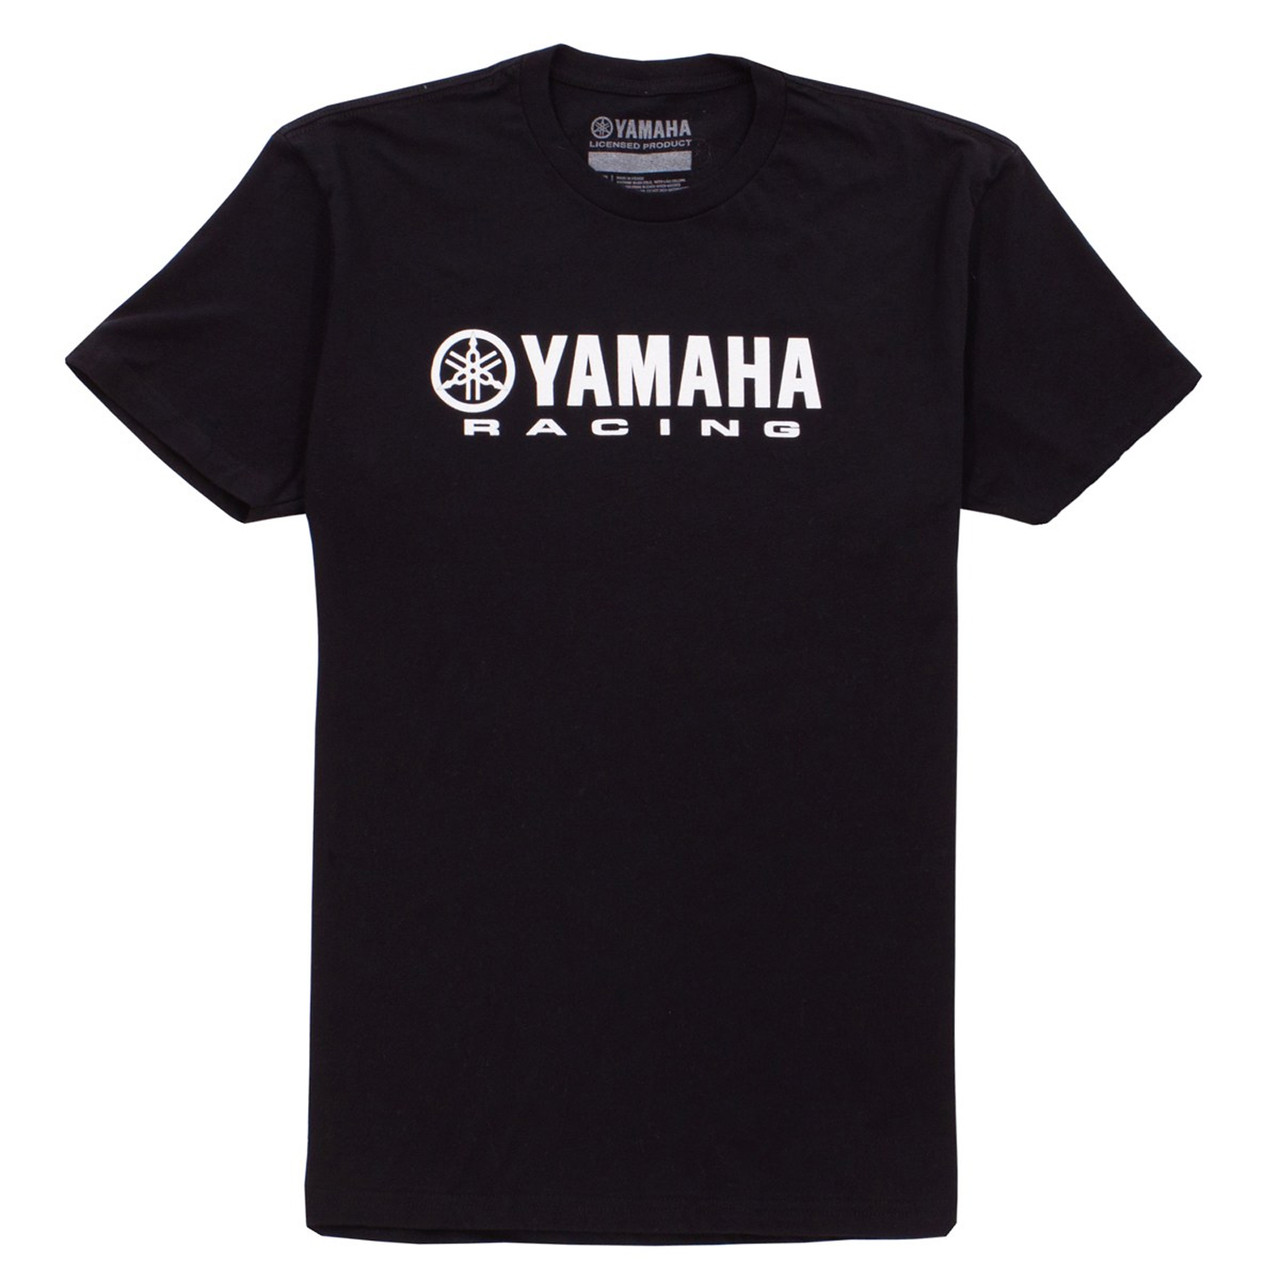 Yamaha New OEM, Branded Men's Racing Classic Short Sleeve Tee, VDF-20TYR-BK-MD